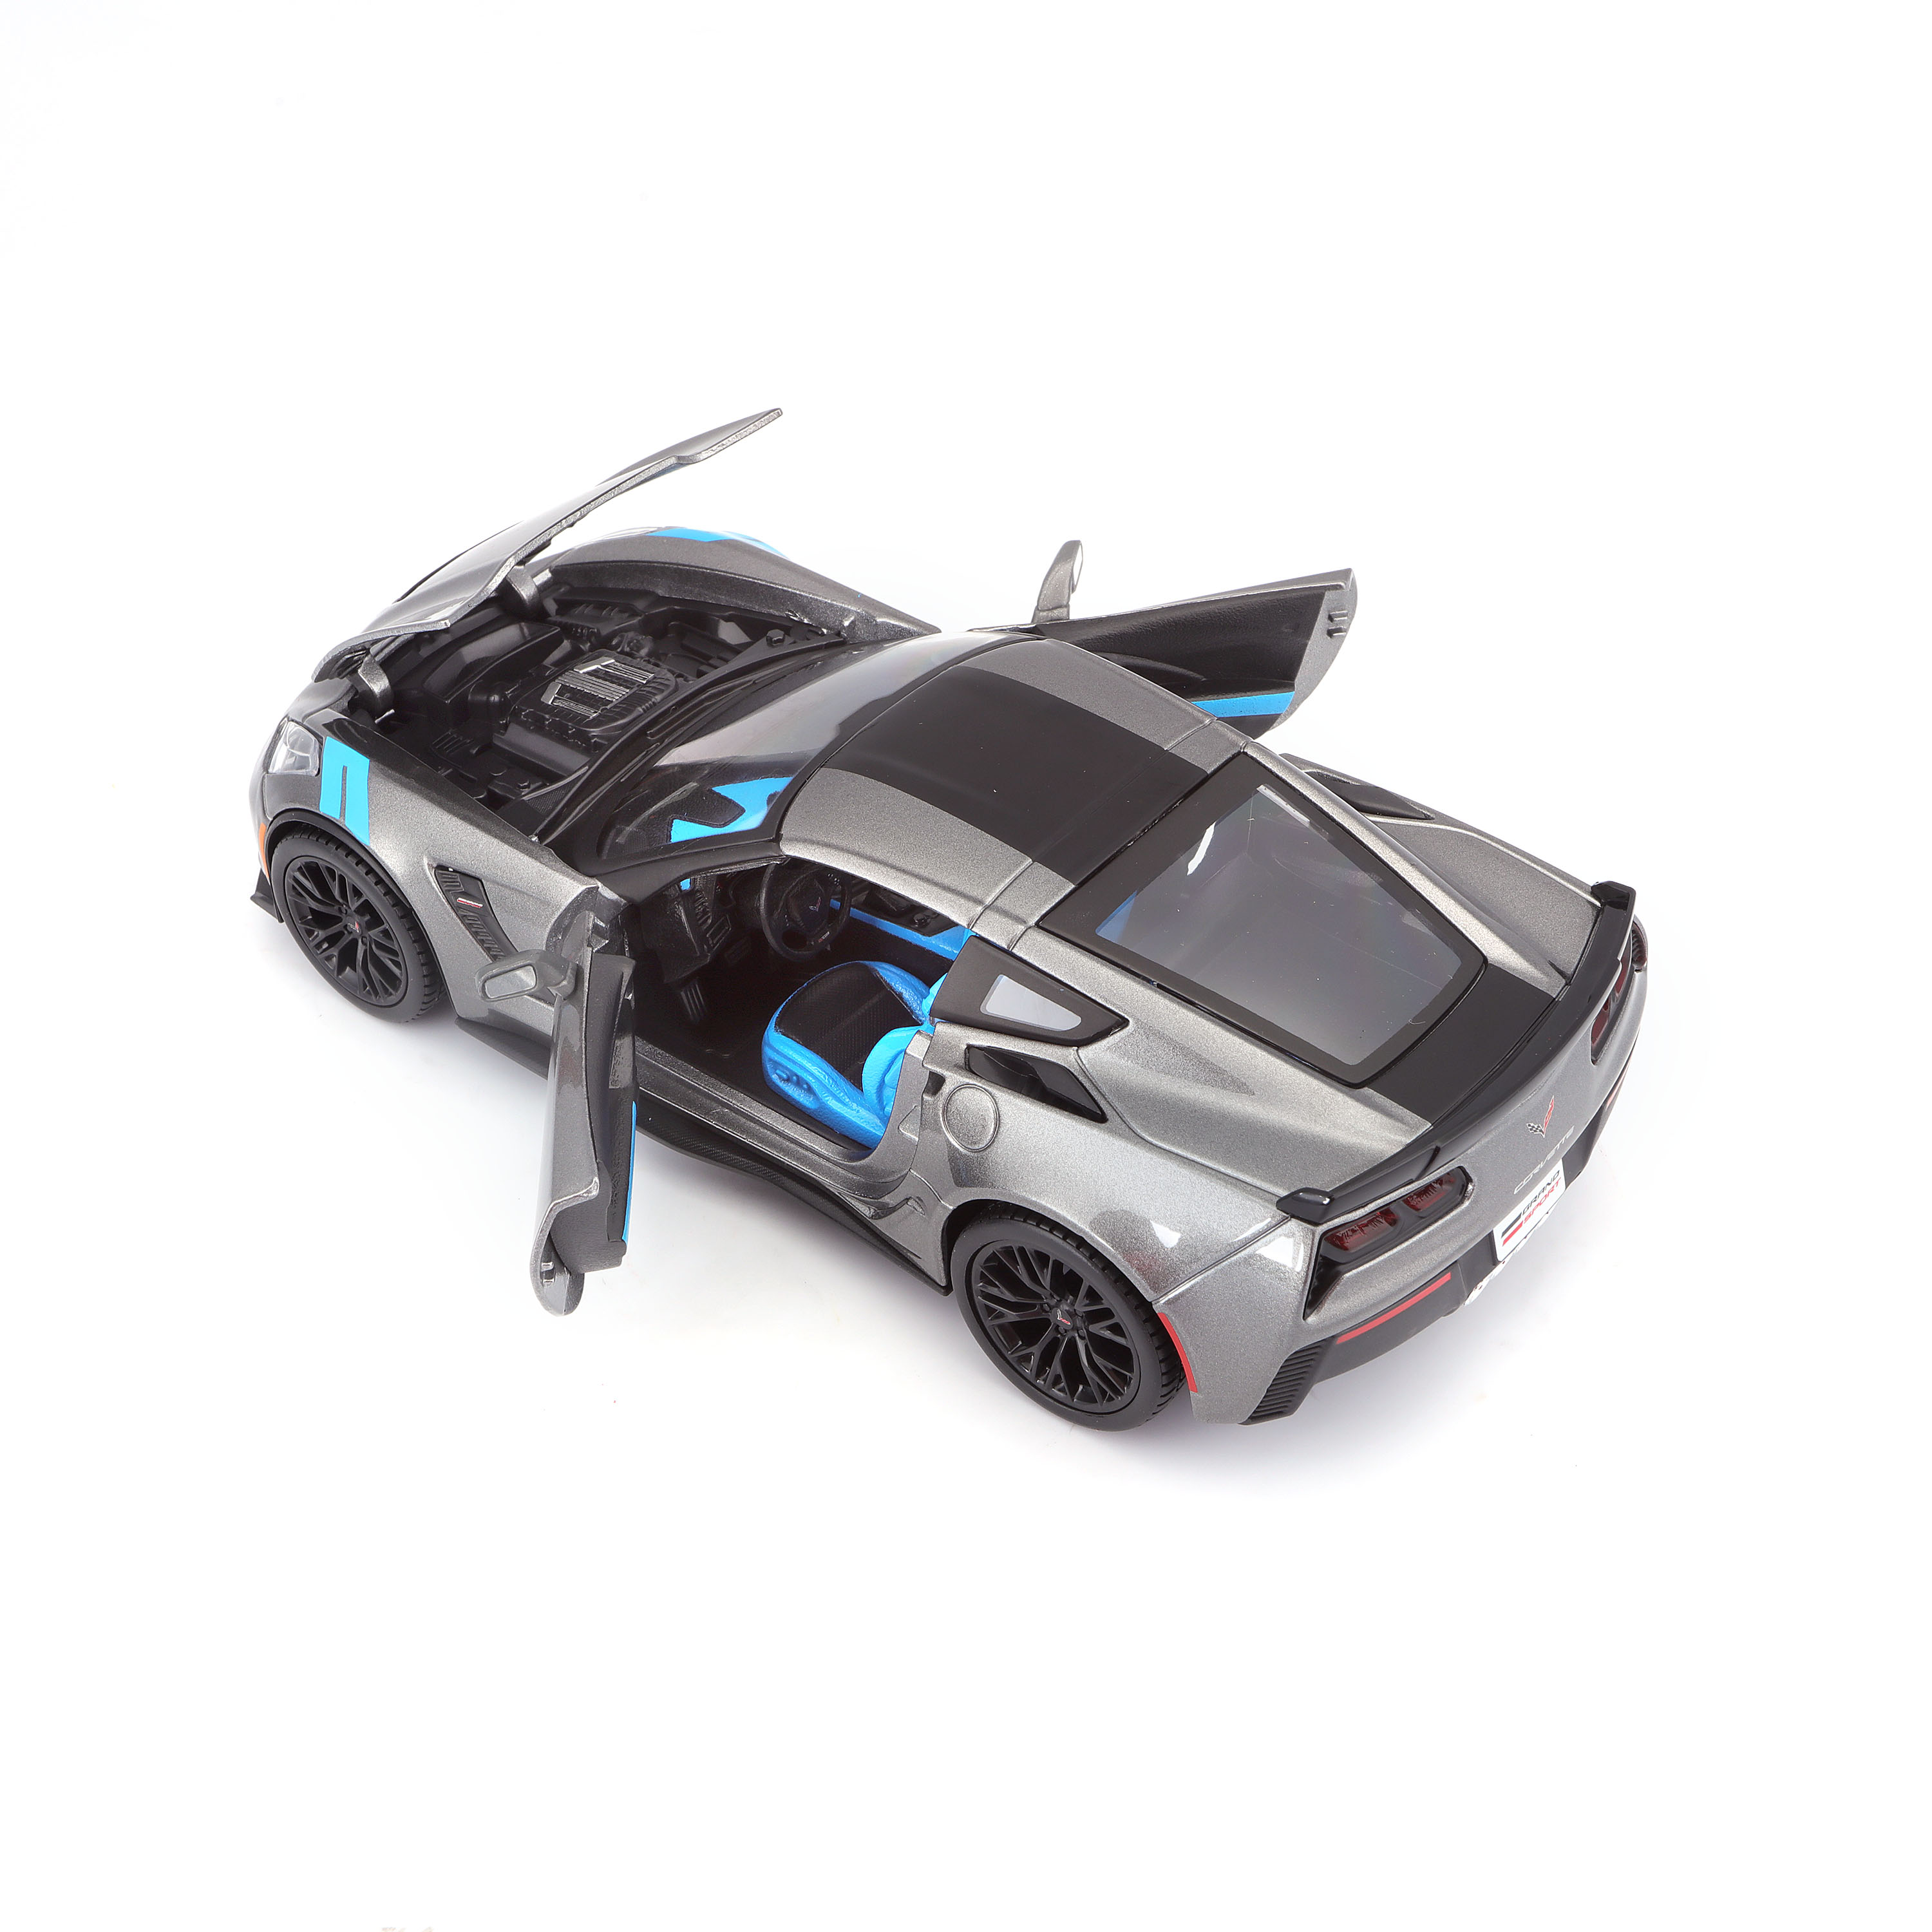 Ігрова автомодель Maisto Corvette Grand Sport 2017, сірий металік, 1:24 (31516 met. grey) - фото 4